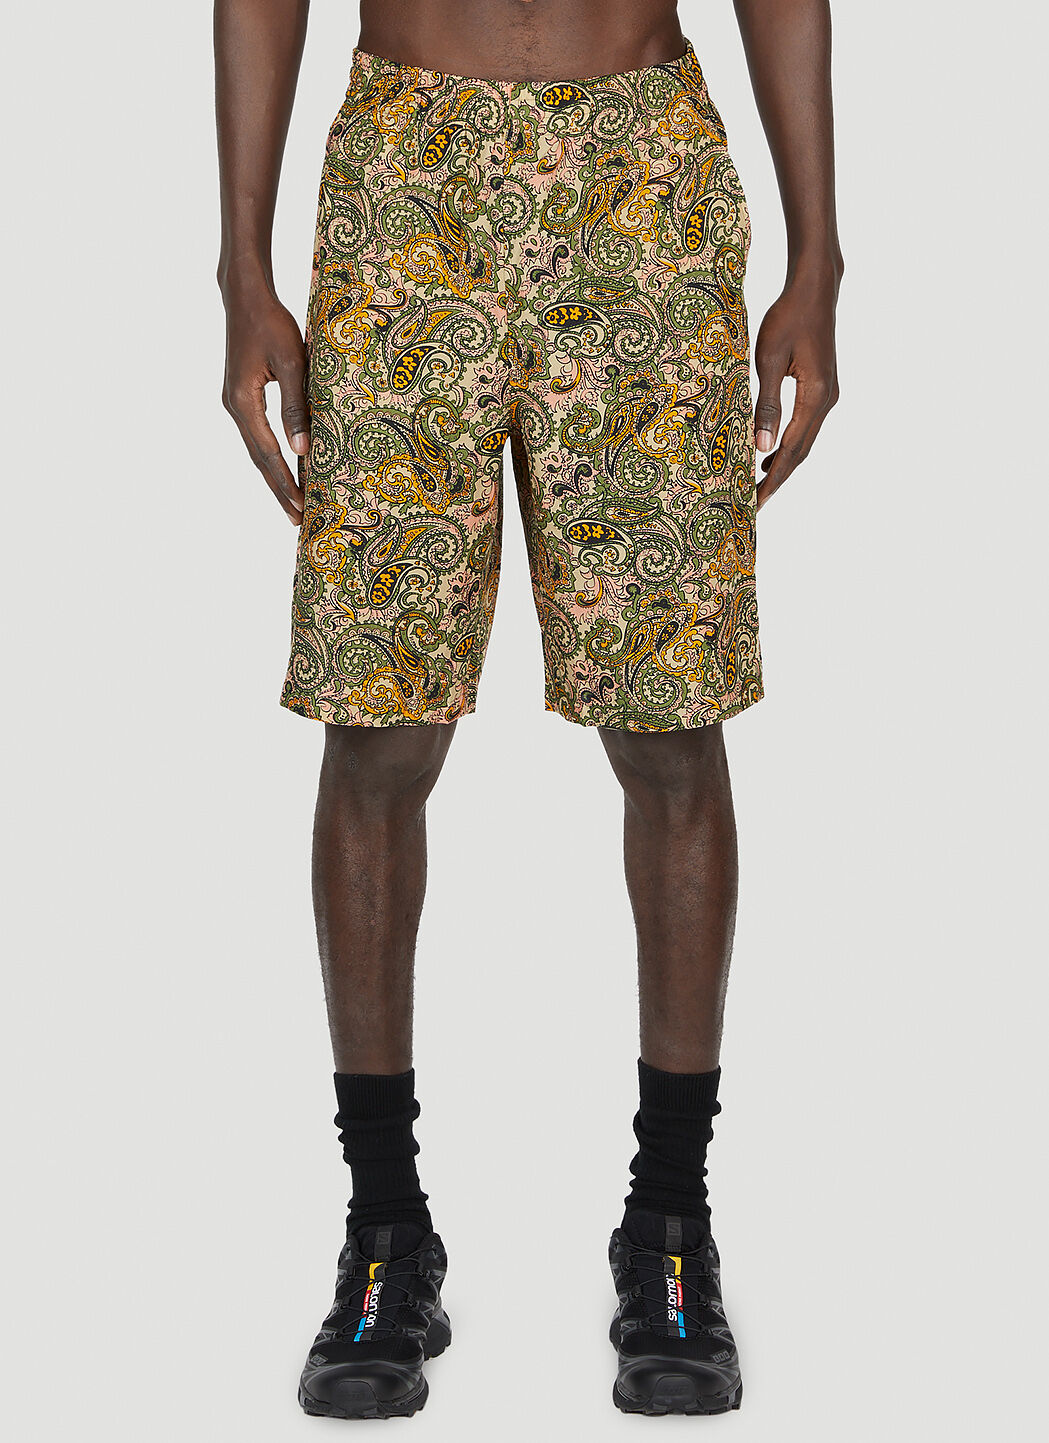 NOMA t.d. Summer Shorts Multicolour nma0156002